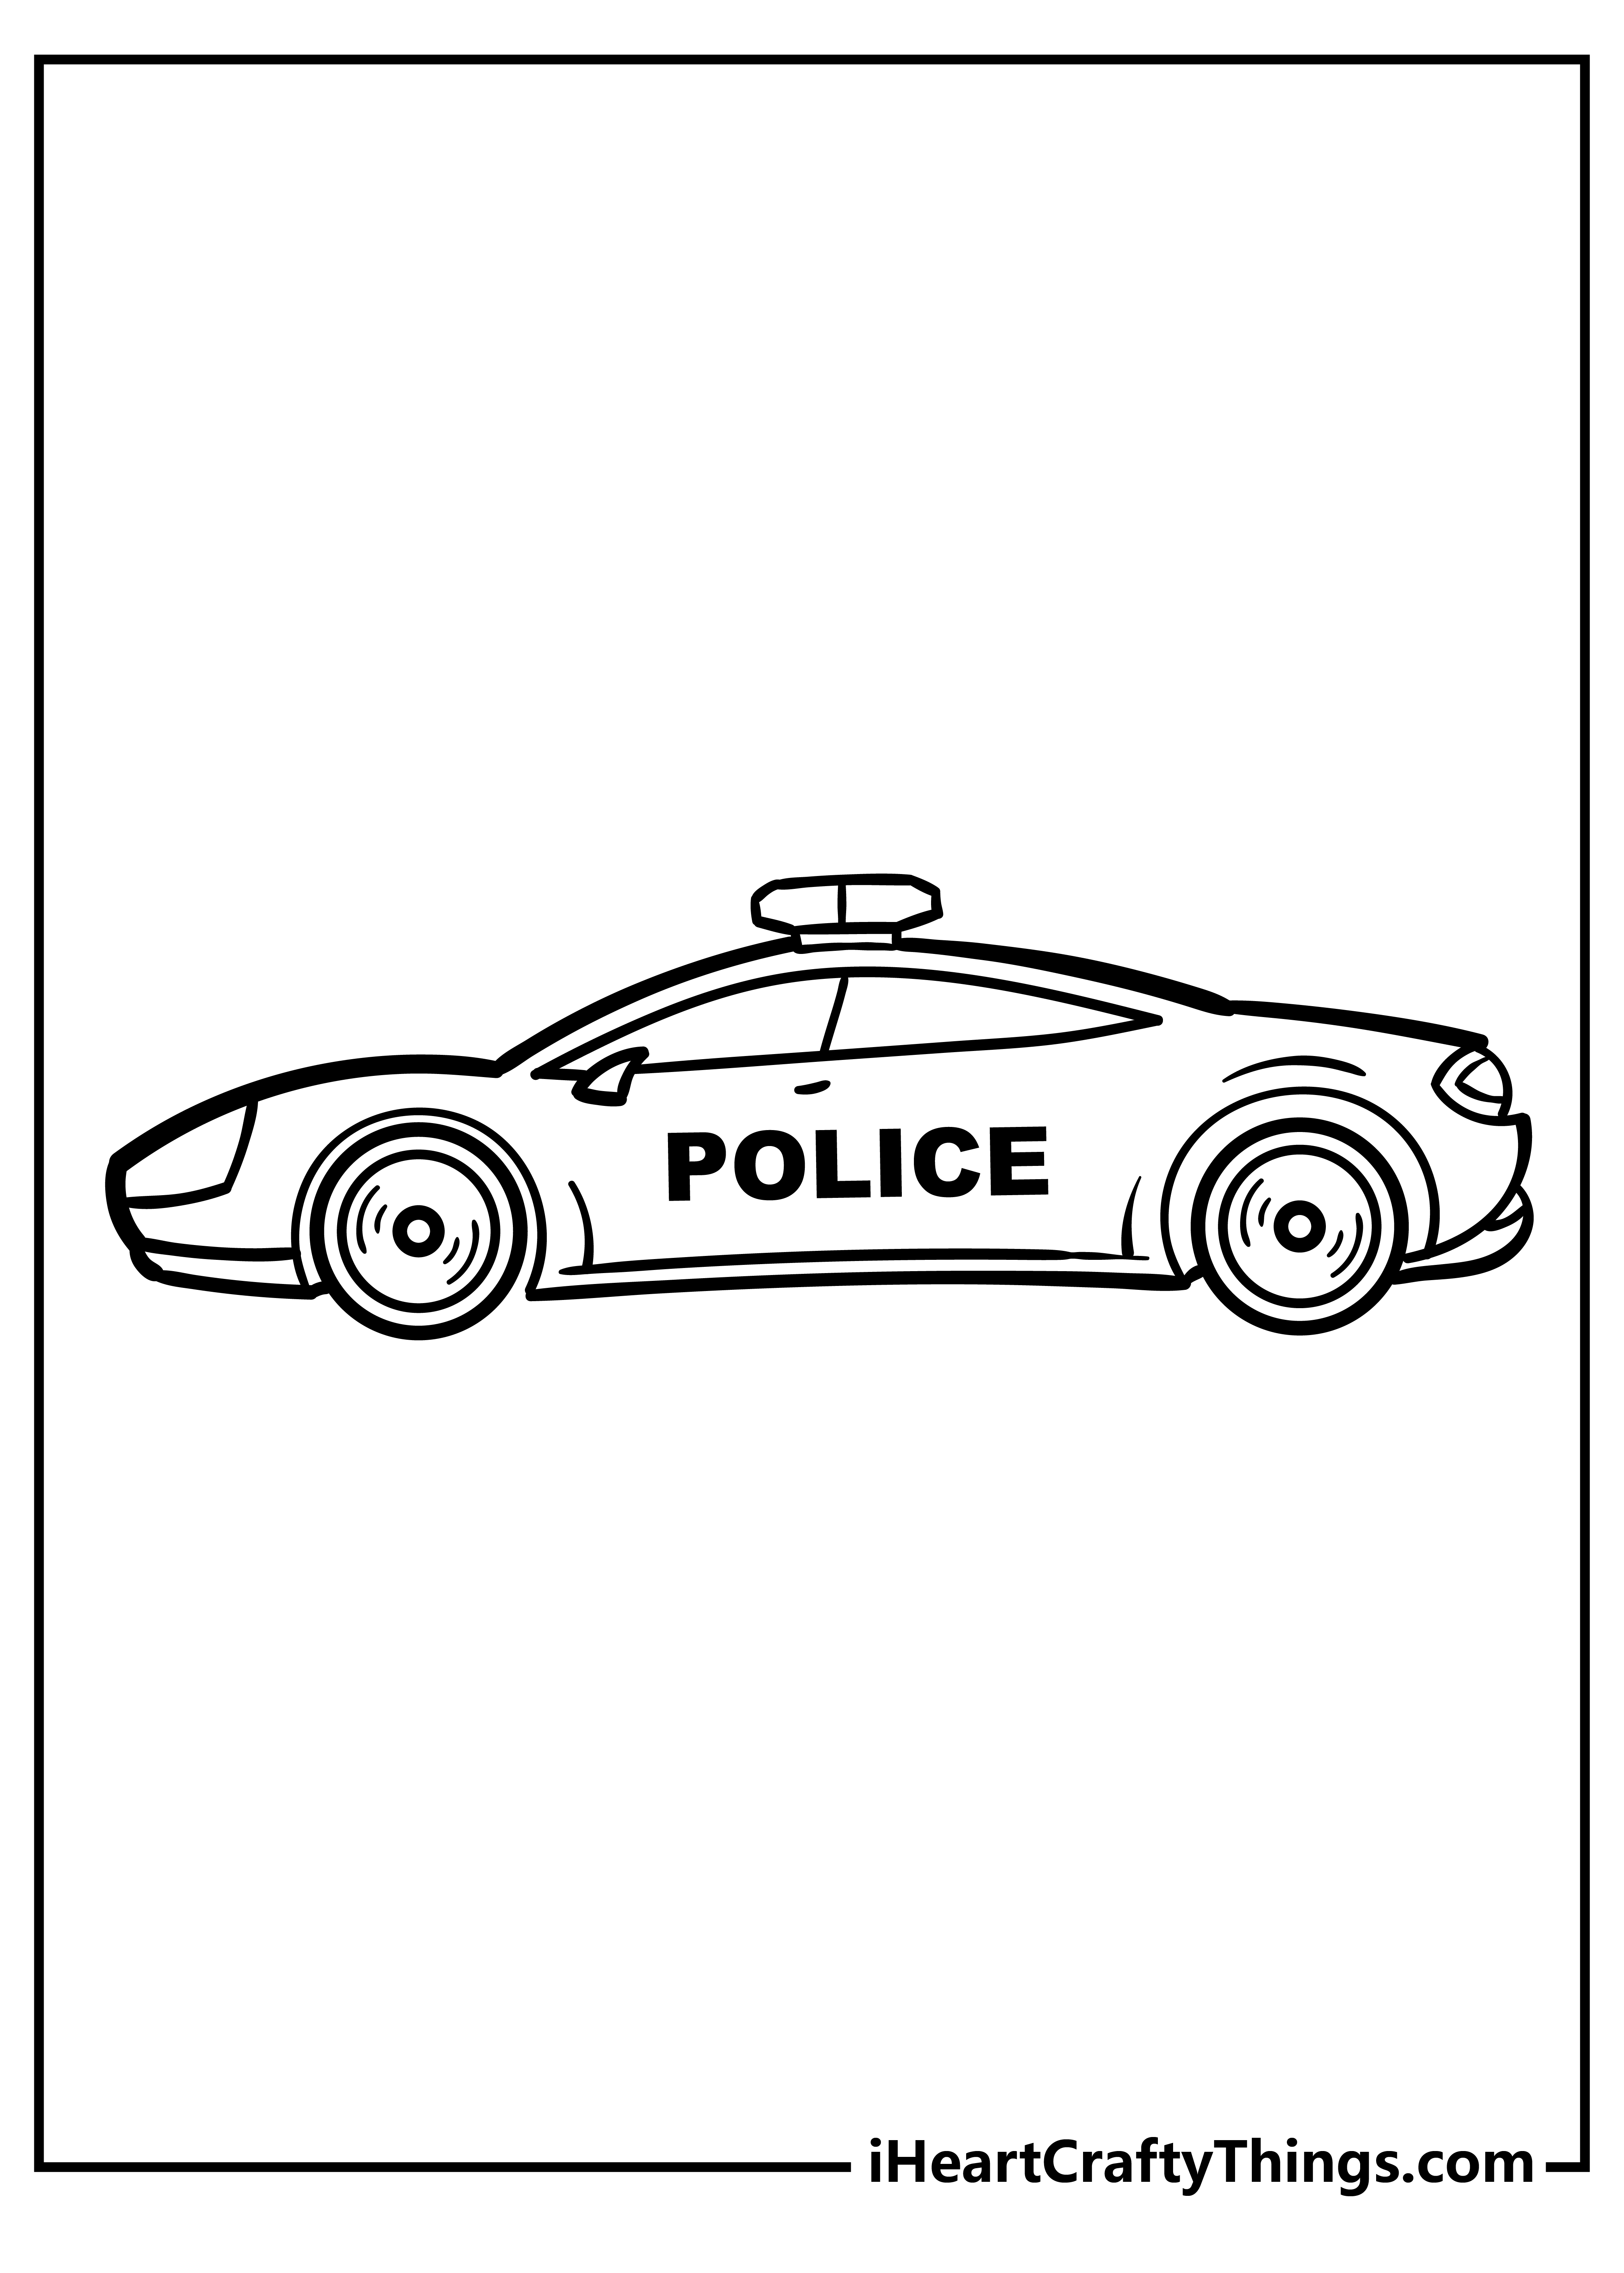 Police Car Coloring Original Sheet for children free download